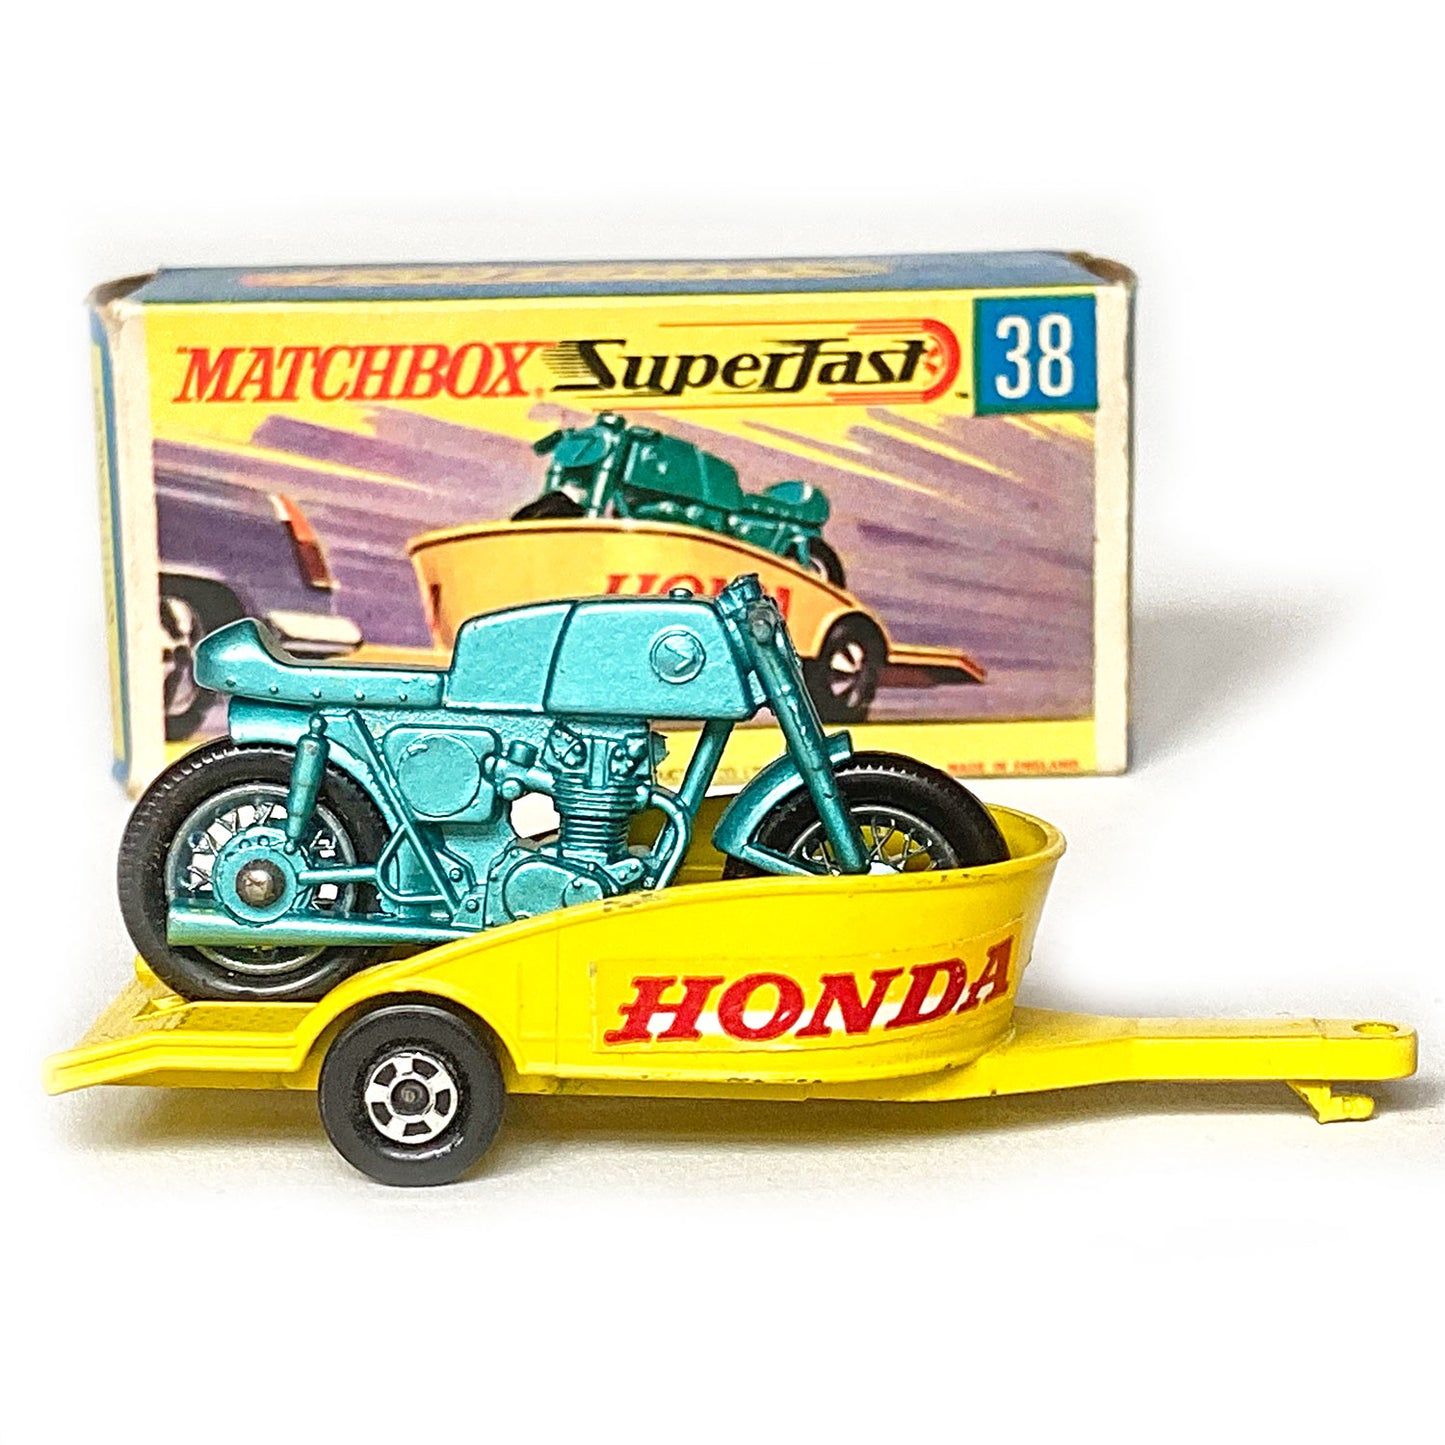 Matchbox Superfast Honda race bike and trailer, MB38, near mint, 1968